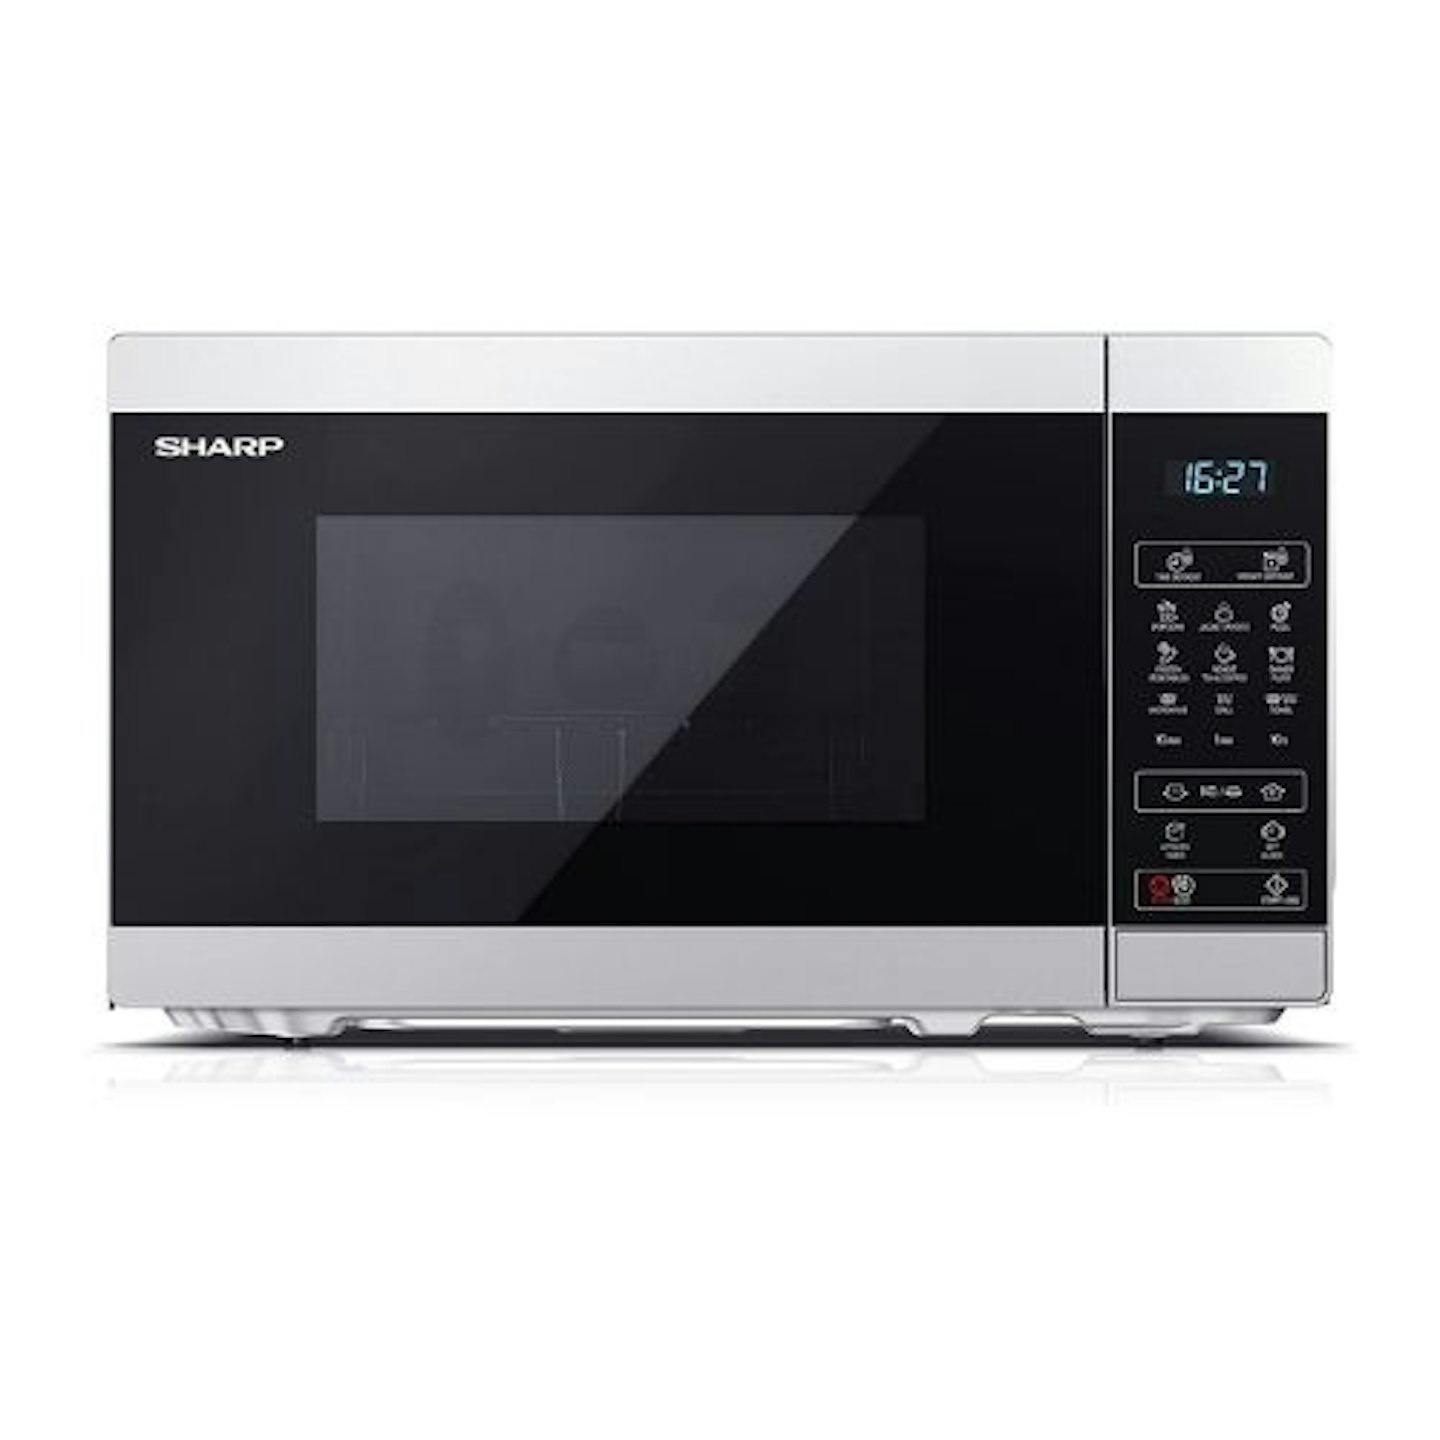 SHARP YC-MG02U-S 800W Digital Microwave